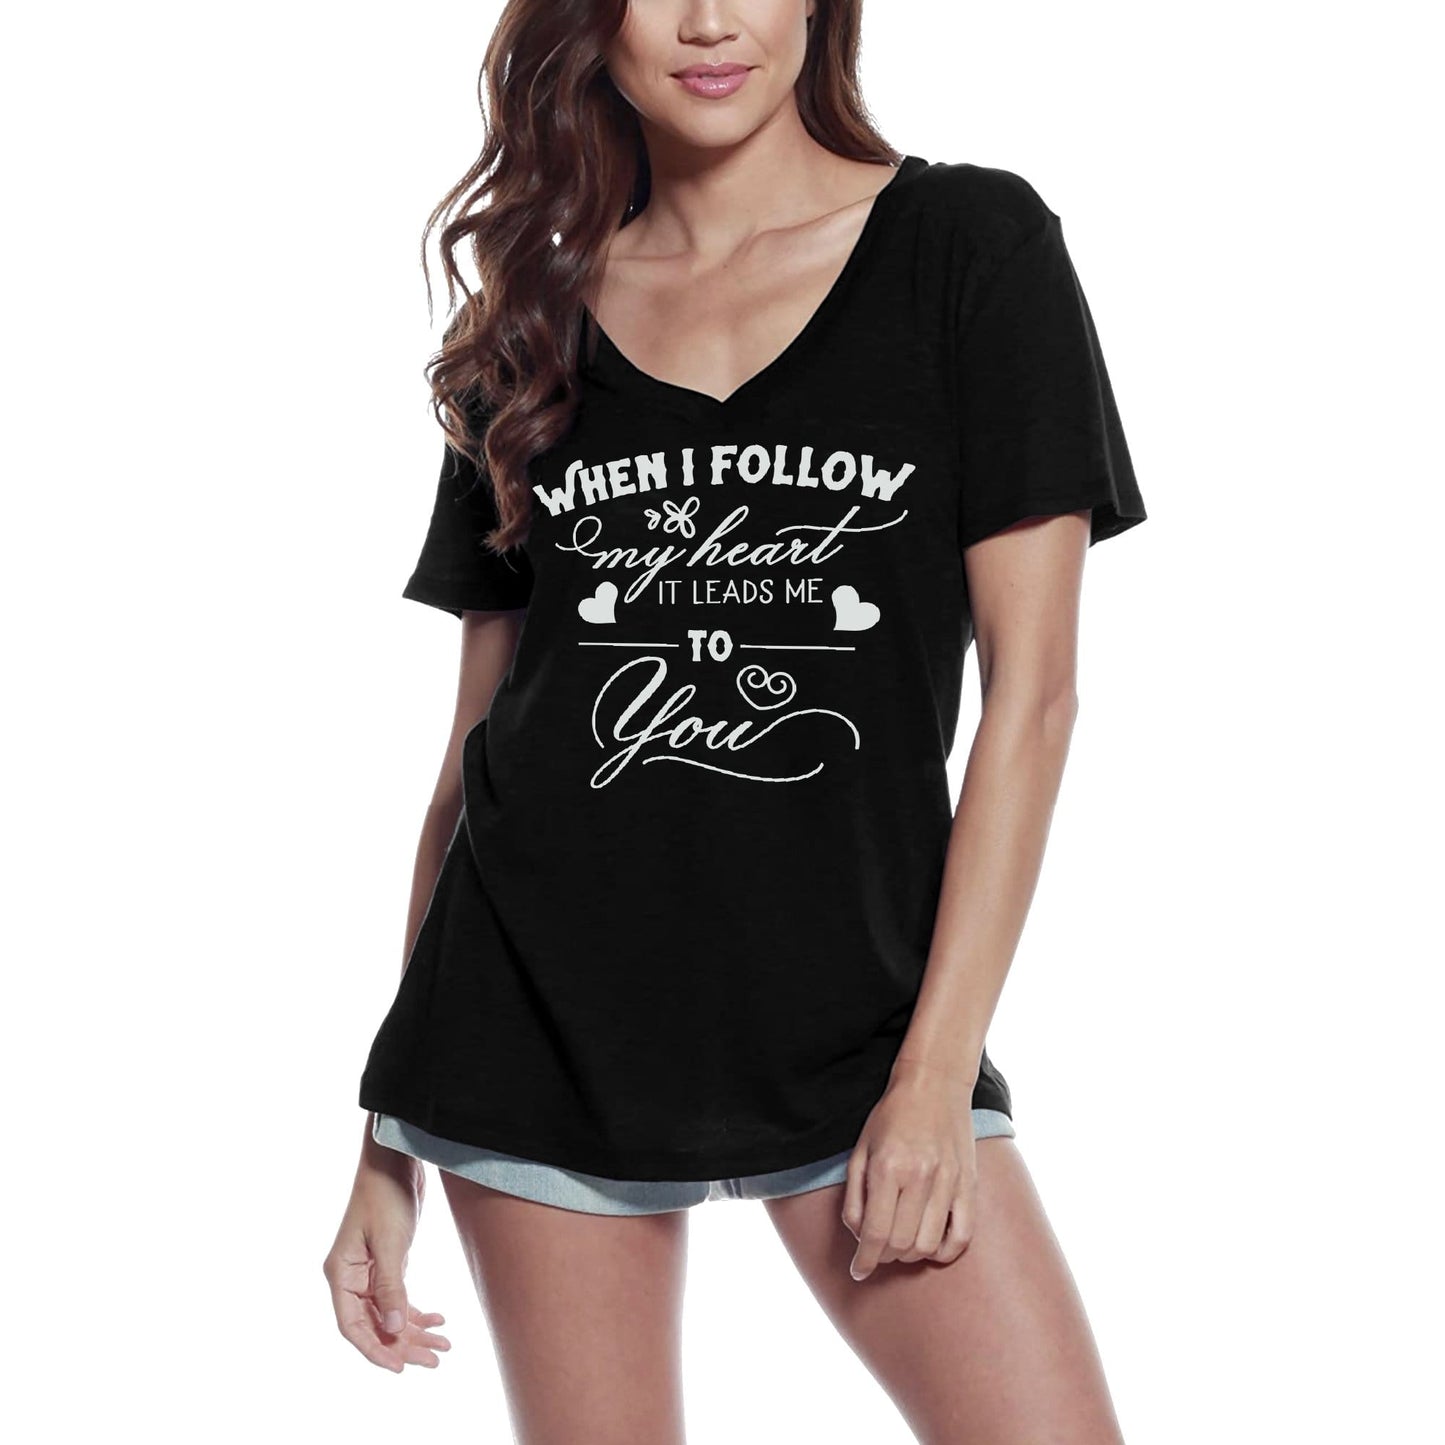 ULTRABASIC Women's T-Shirt When I Follow My Heart It Leads Me To You - Short Sleeve Tee Shirt Tops